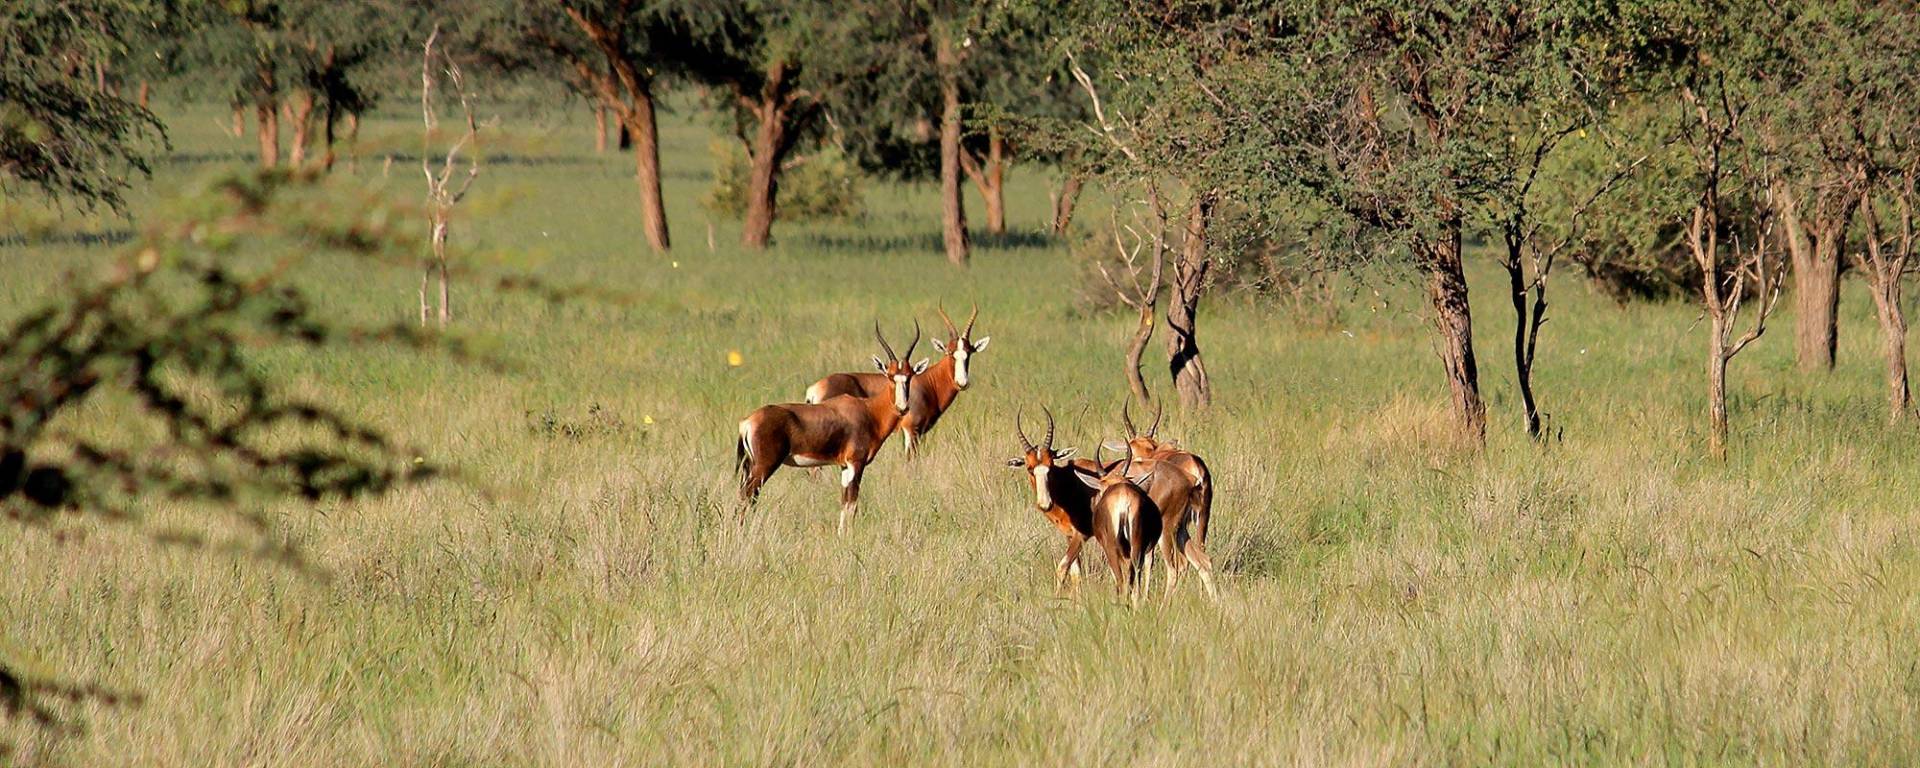 Blesbok antelope during rainy season